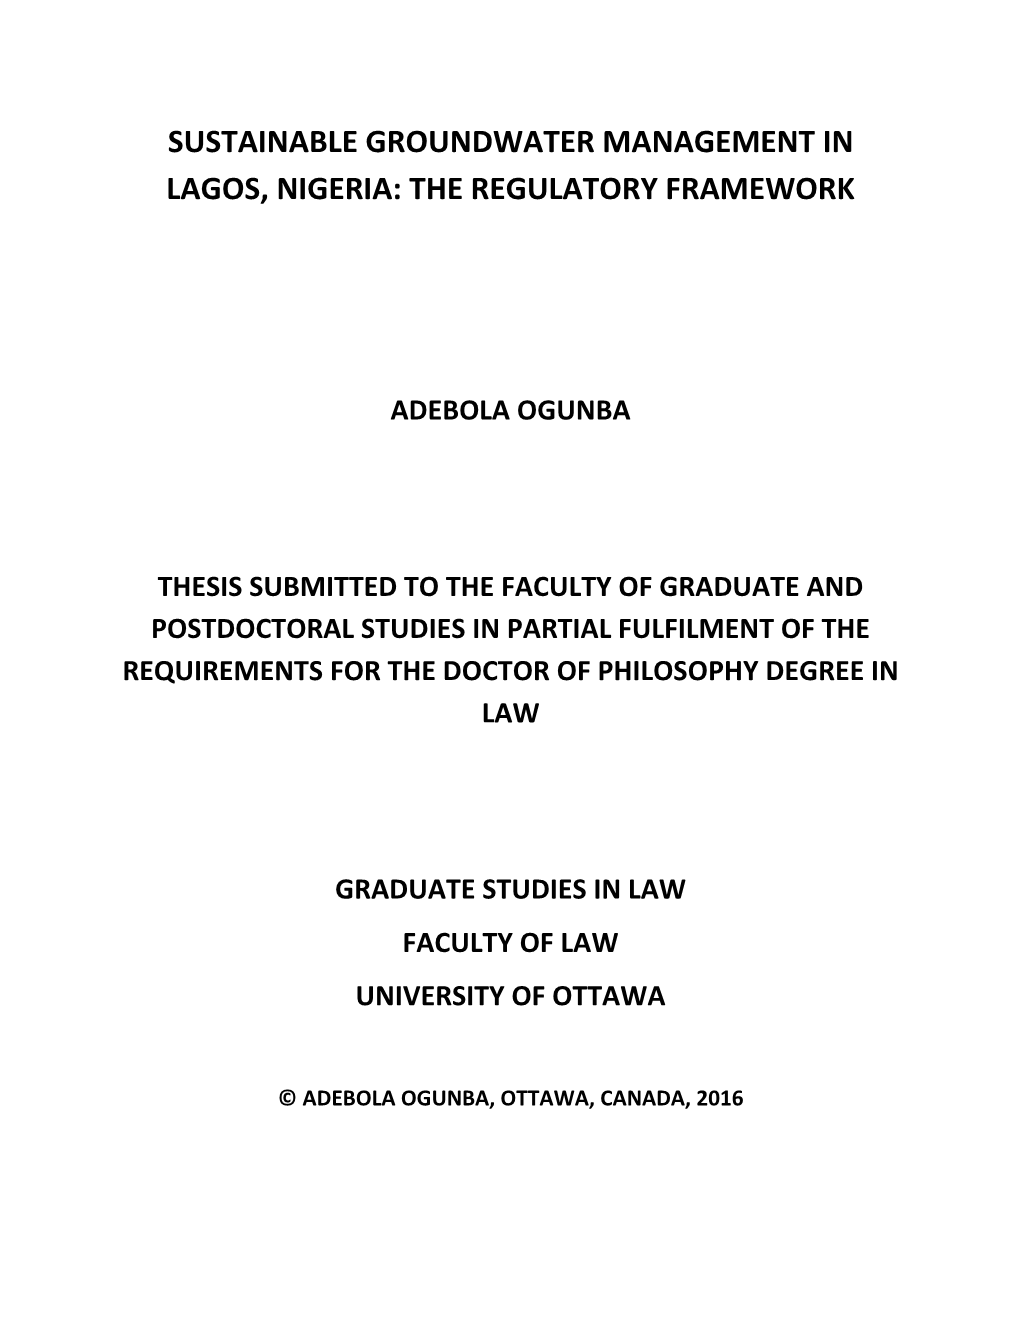 Sustainable Groundwater Management in Lagos, Nigeria: the Regulatory Framework